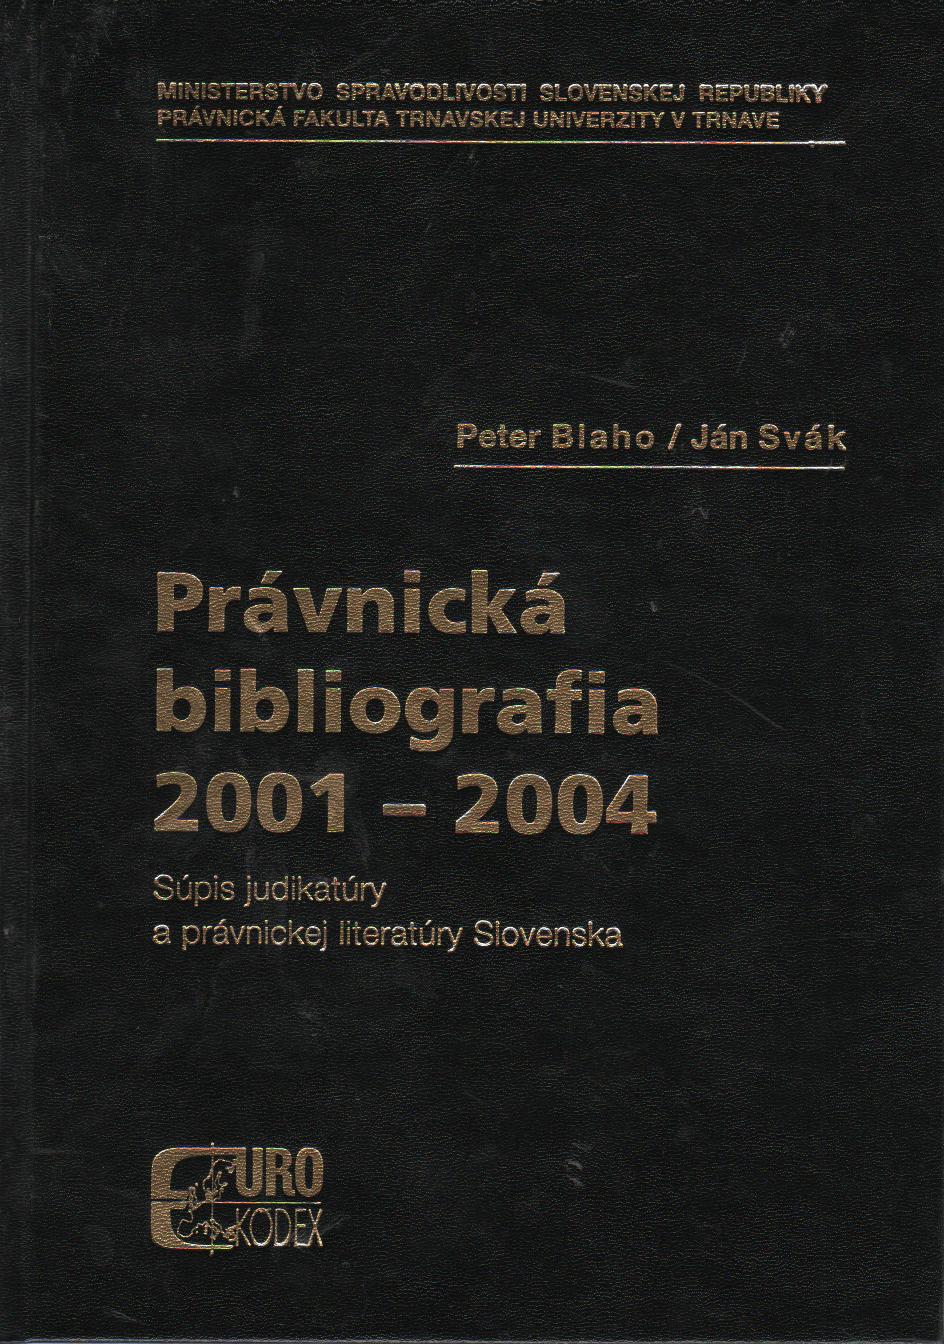 Právnická bibliografia 2001-2004